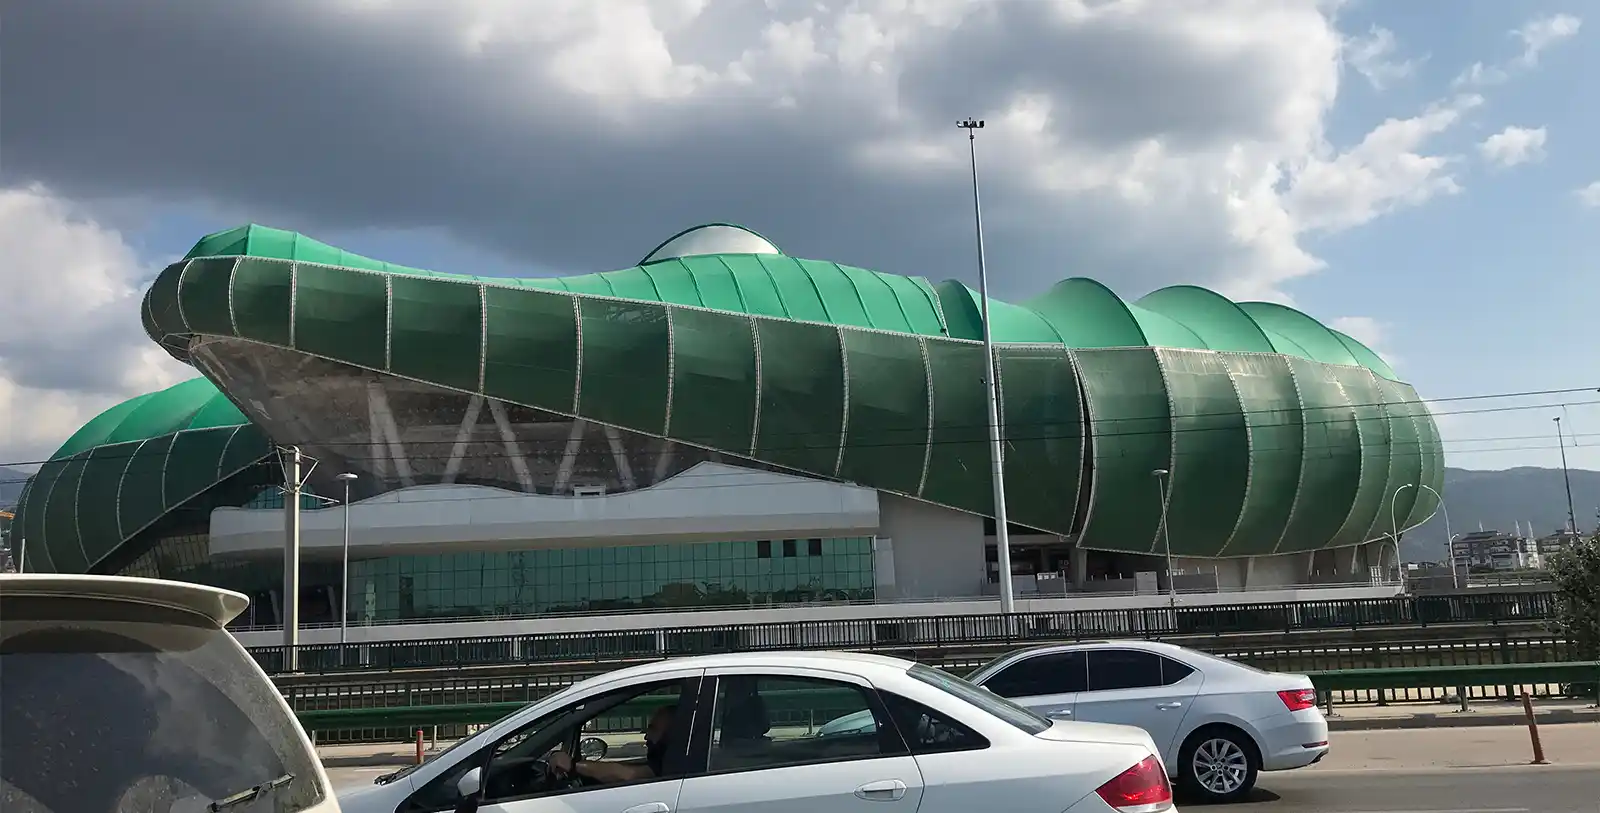 Timsah Arena is a Crocodile-shaped stadium in Bursa